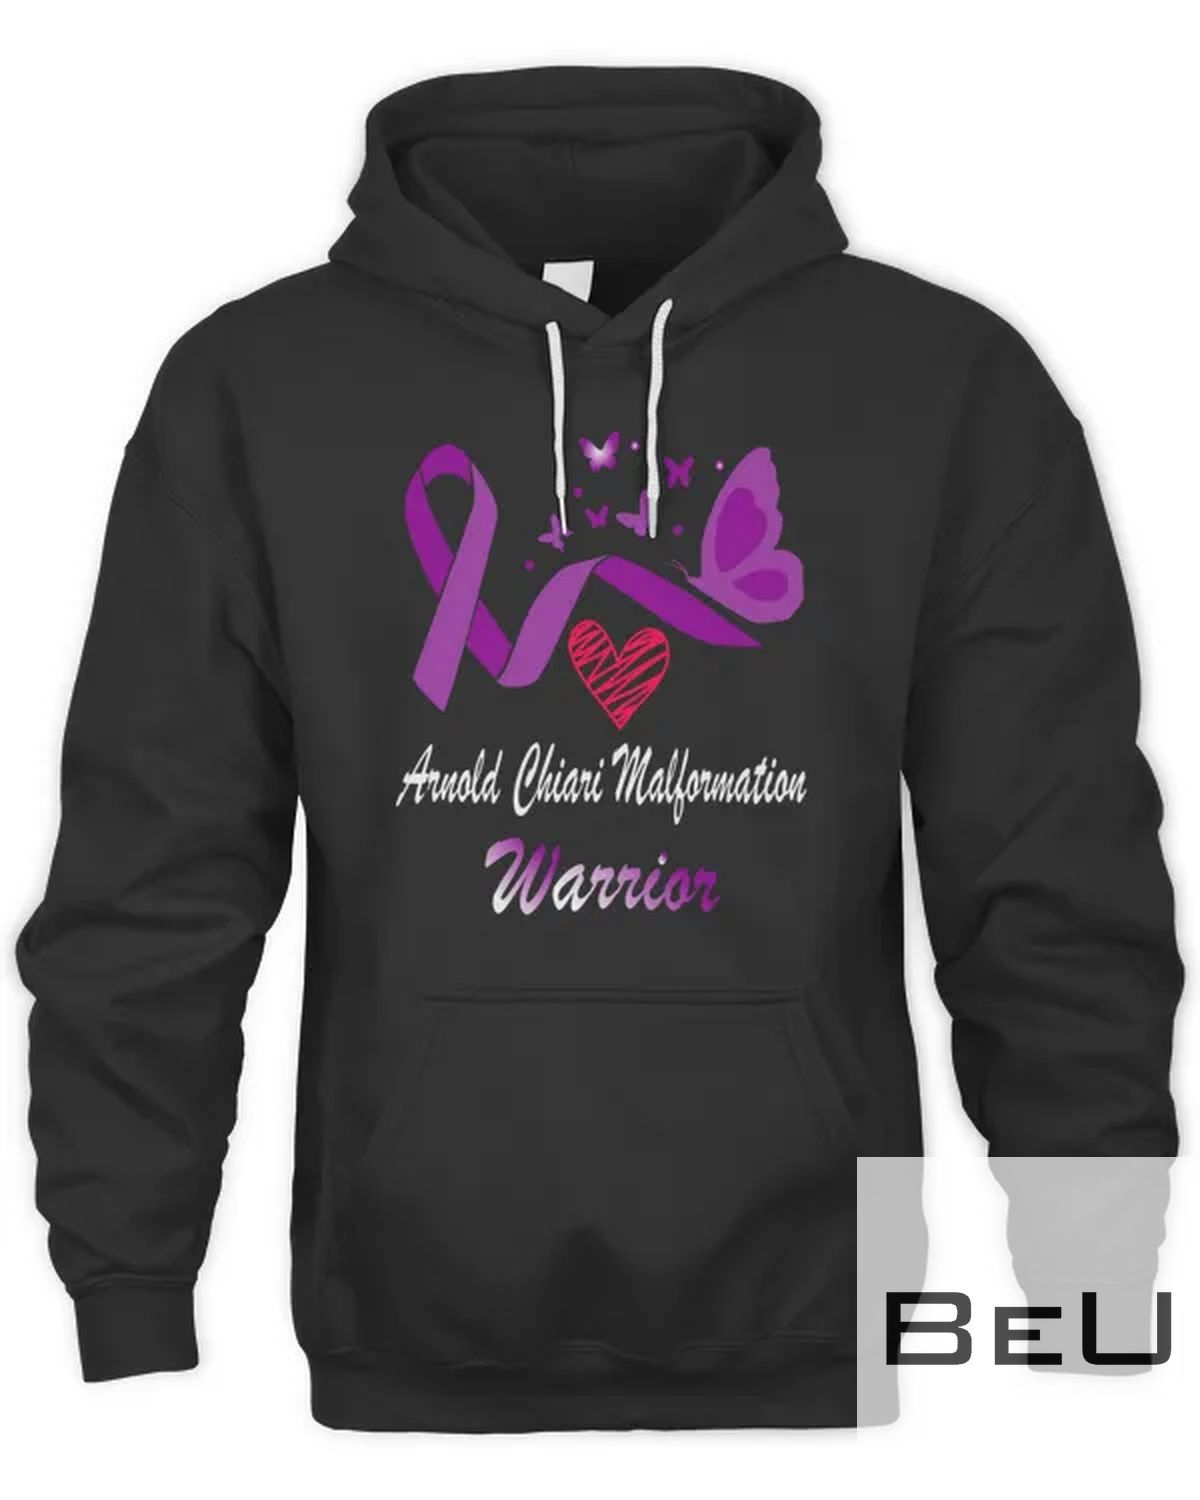 Arnold Chiari Malformation Warrior Butterfly Purple Ribbon ACM Support Arnold Chiari Malformation Awareness T-shirt